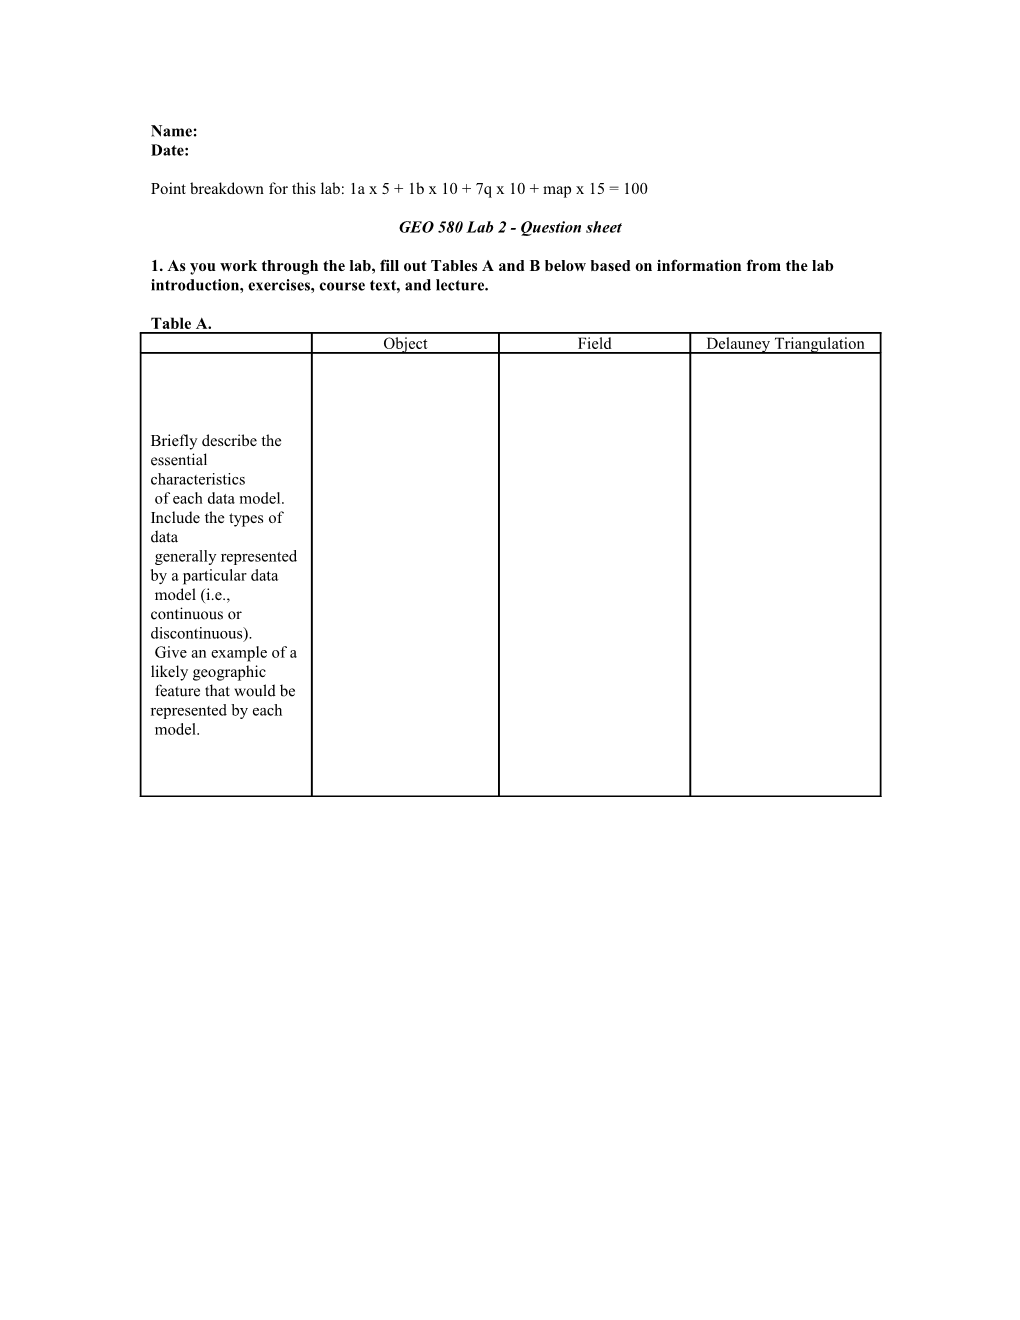 Lab 2 - Question Sheet